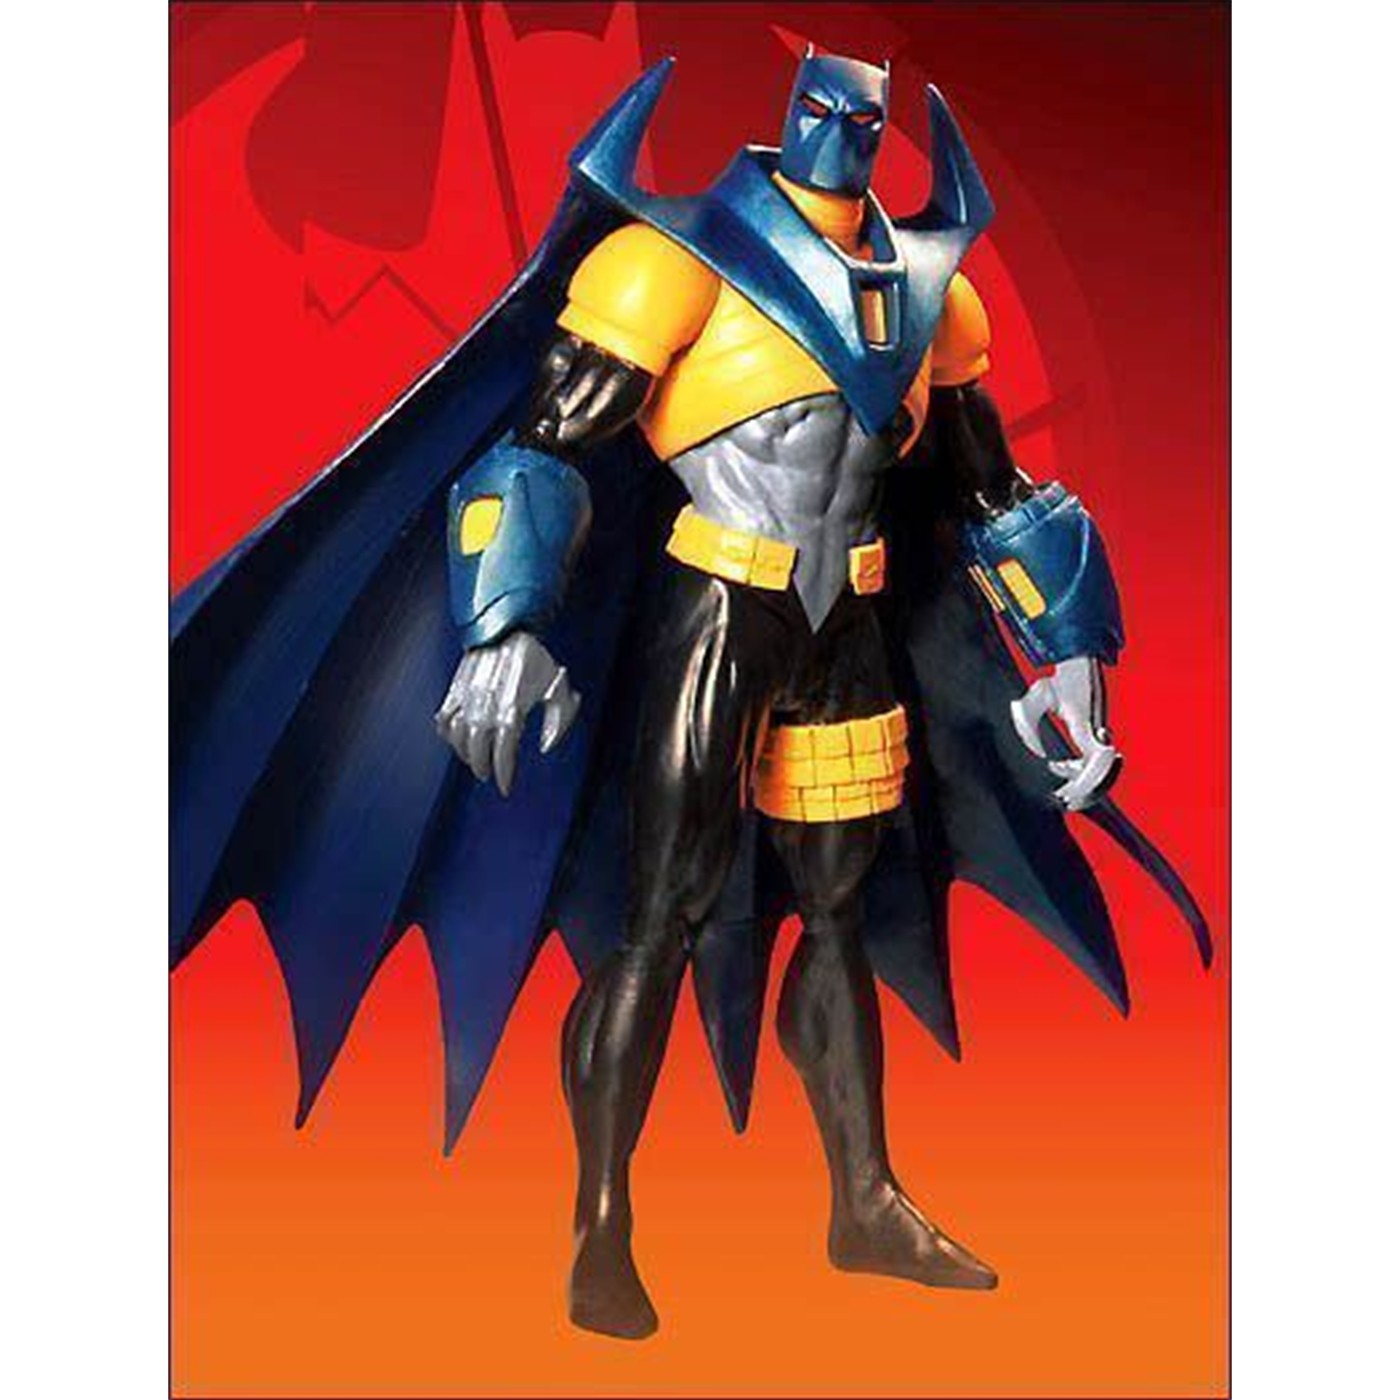 Azrael as Batman Knightfall Action Figure